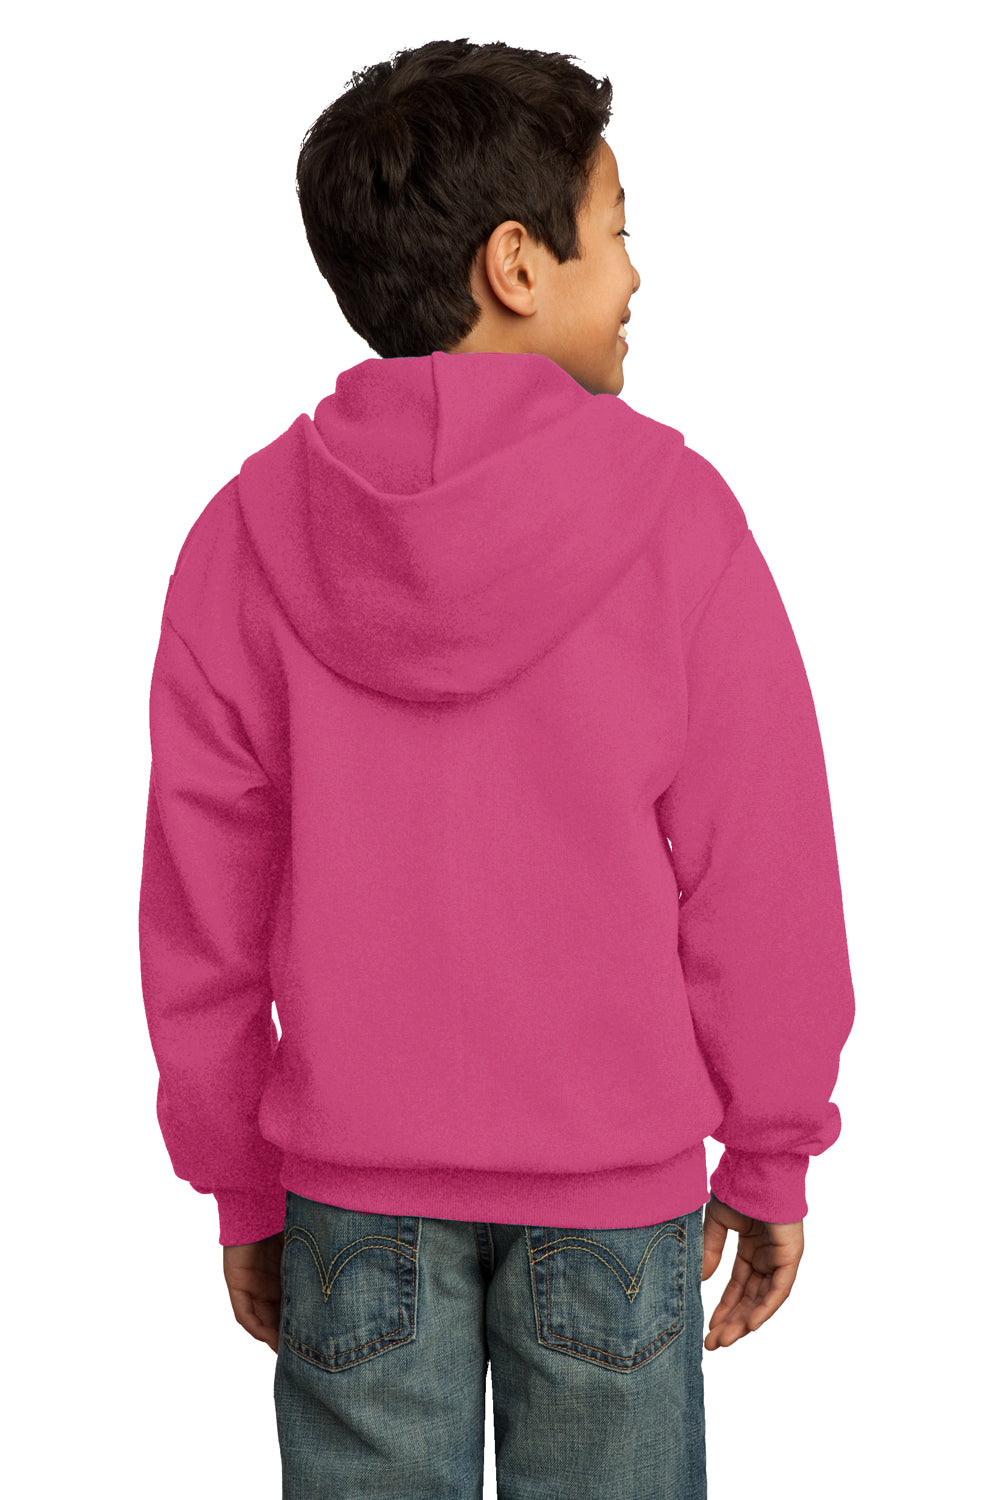 Port & Company PC90YZH Youth Core Fleece Full Zip Hooded Sweatshirt Hoodie Sangria Pink Back